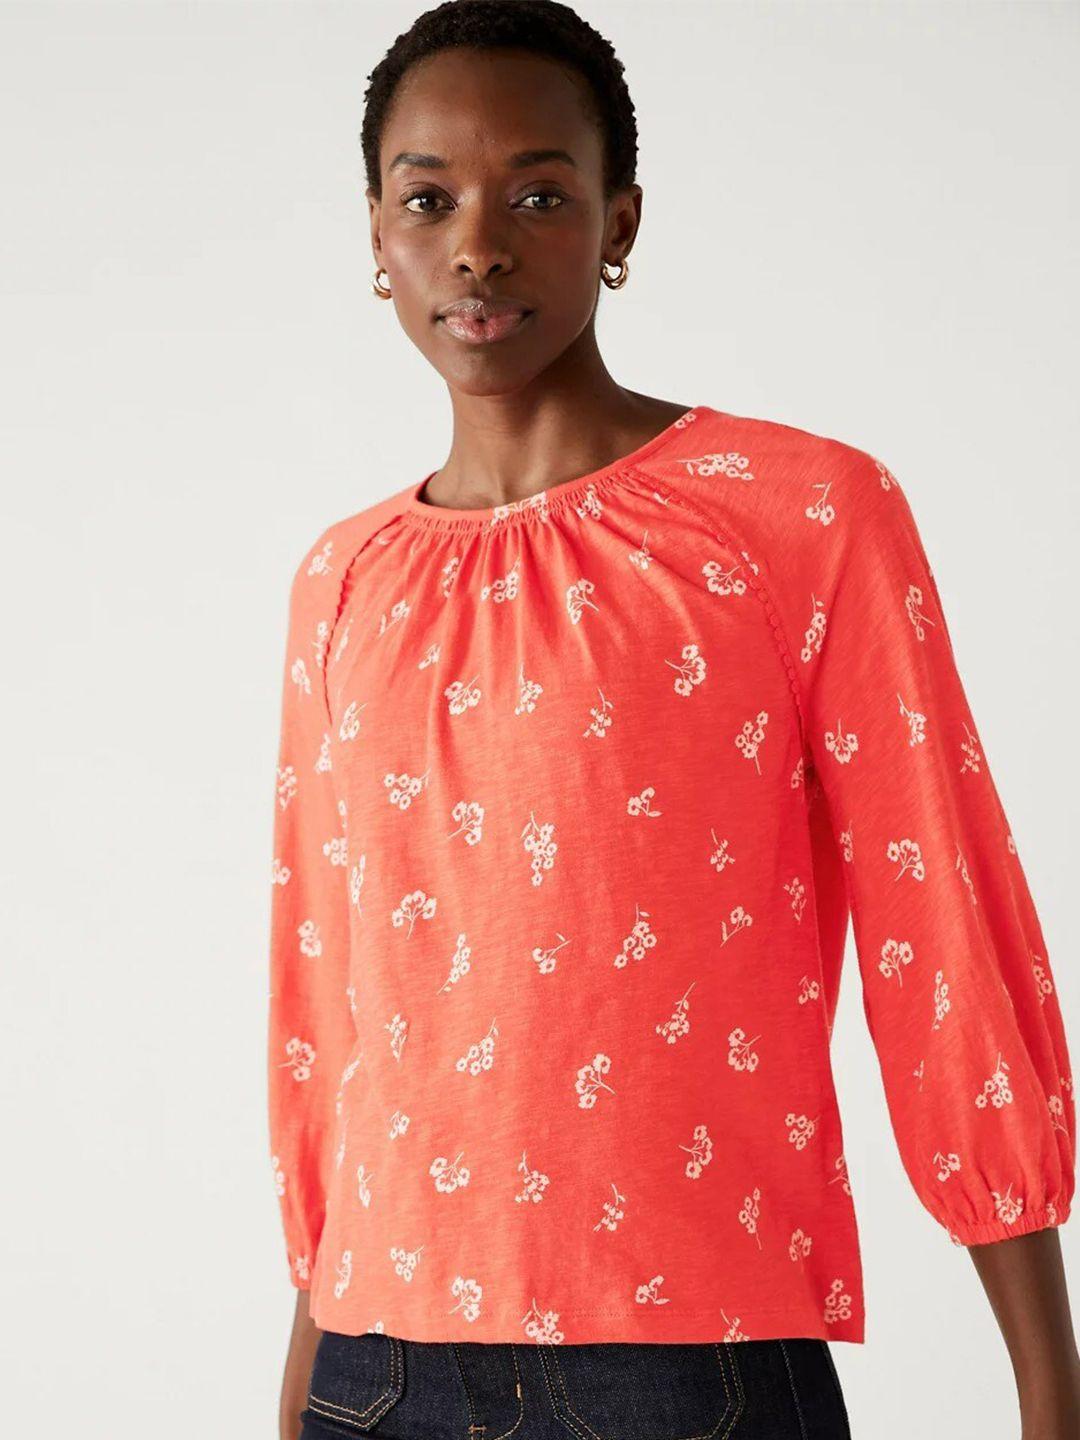 marks & spencer floral print cotton top